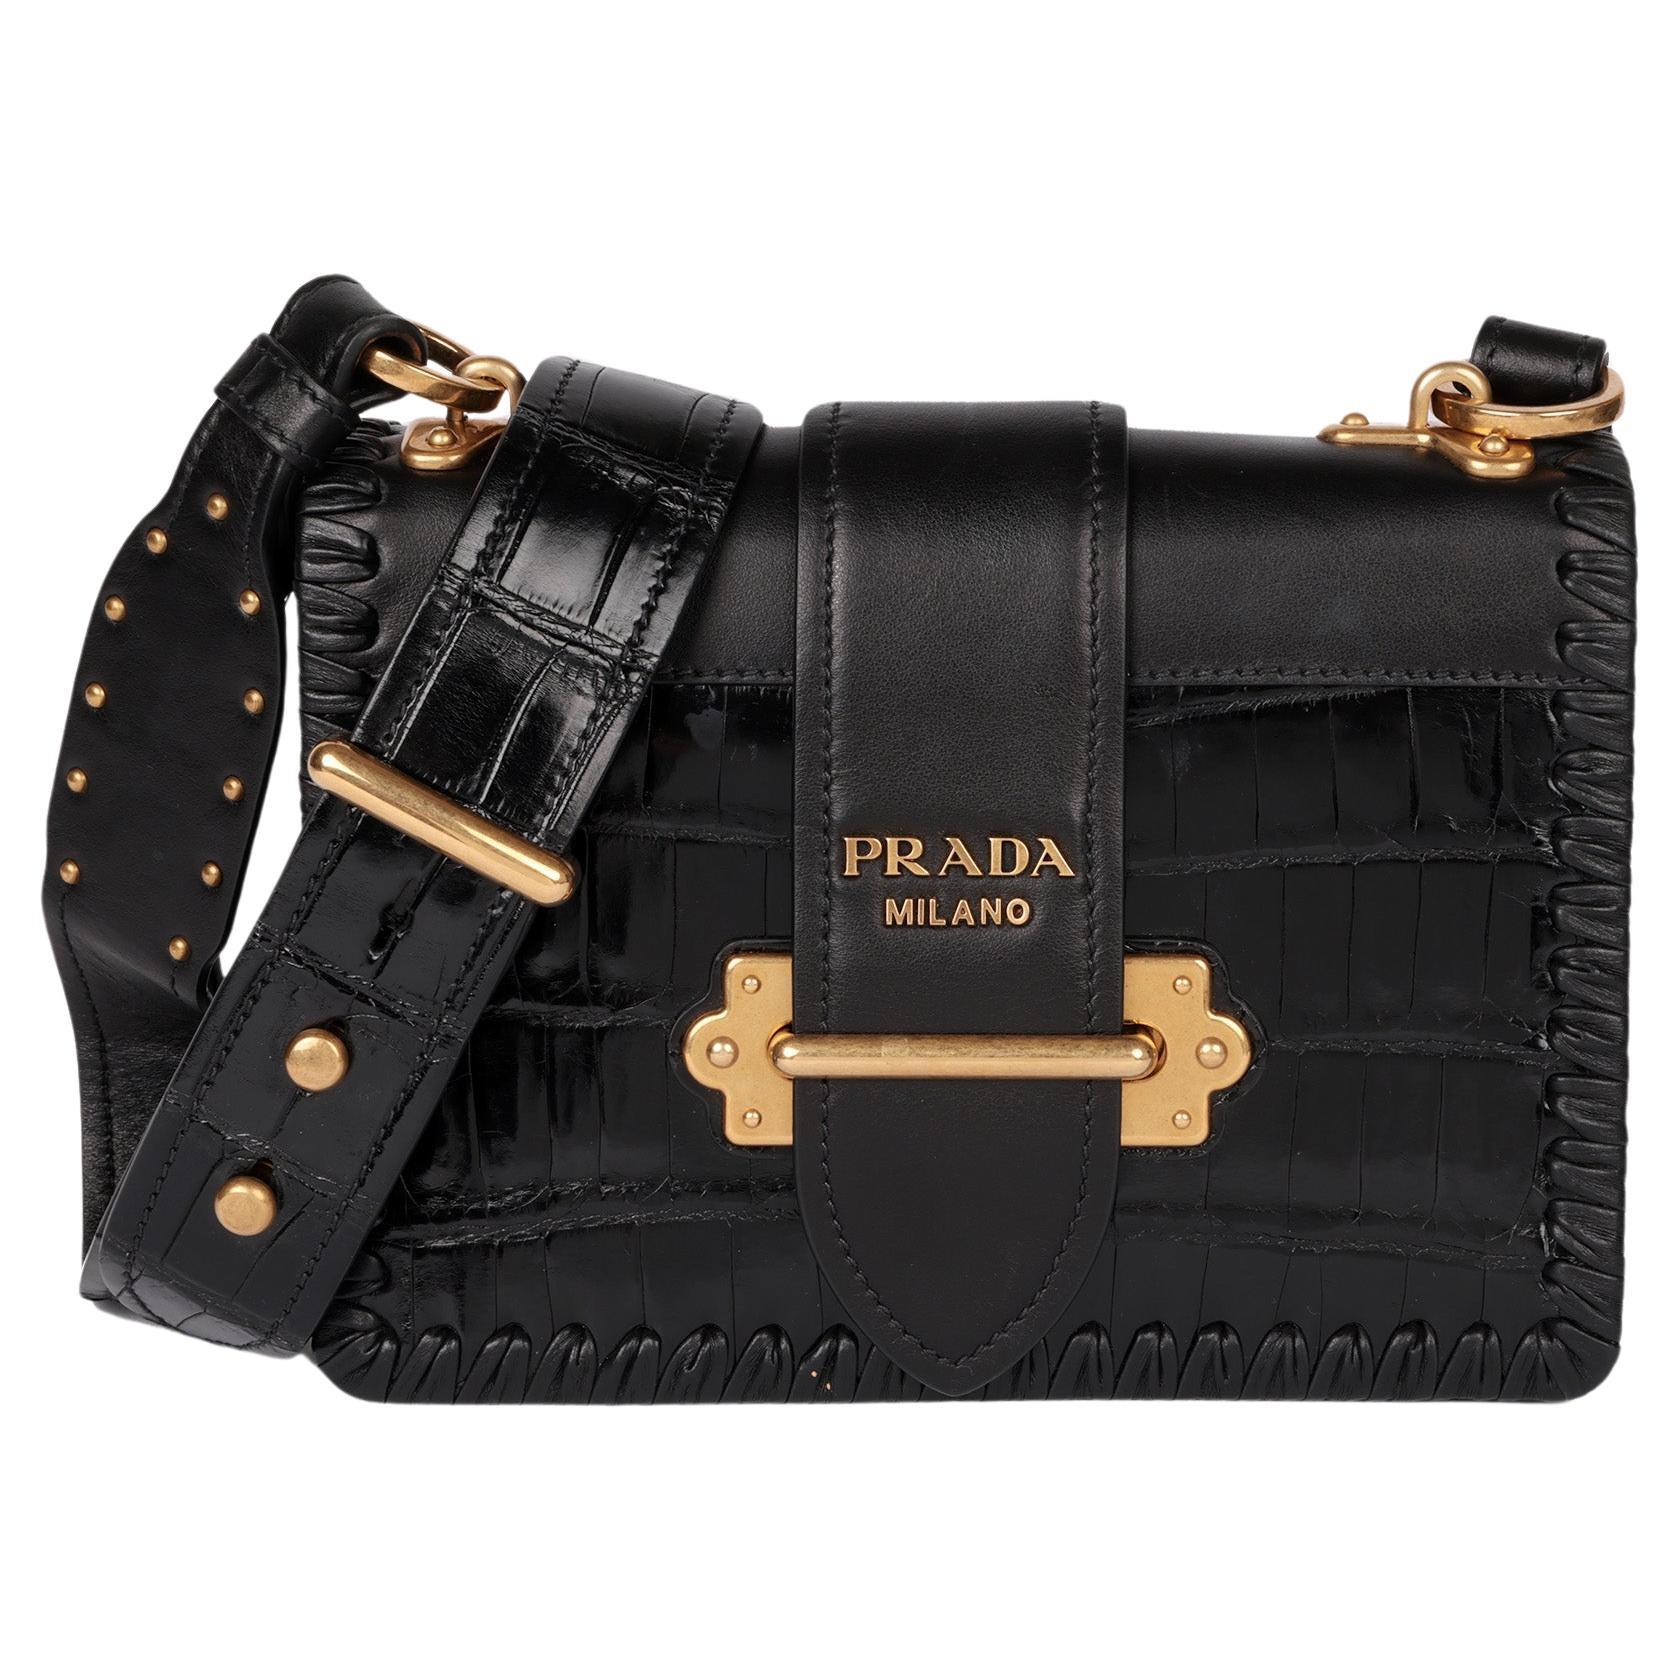 Prada handbag hi-res stock photography and images - Alamy